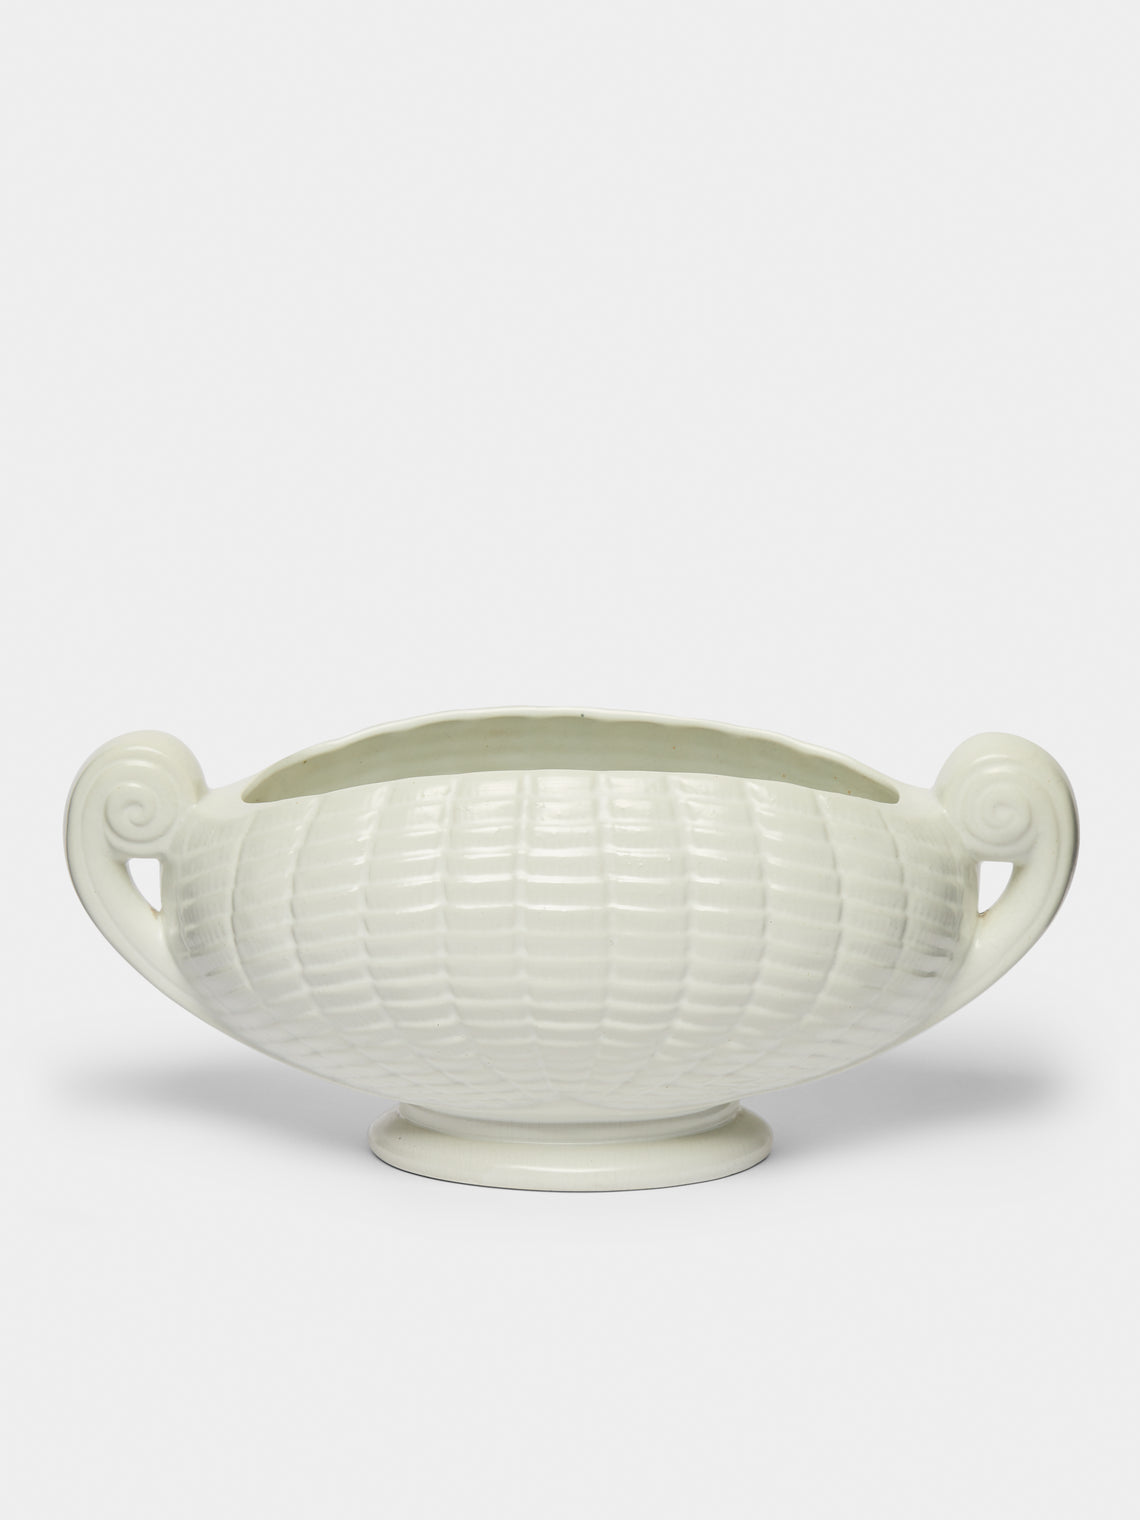 Antique and Vintage - 1930-1940 Large Shell Mantle Vase - White - ABASK - 